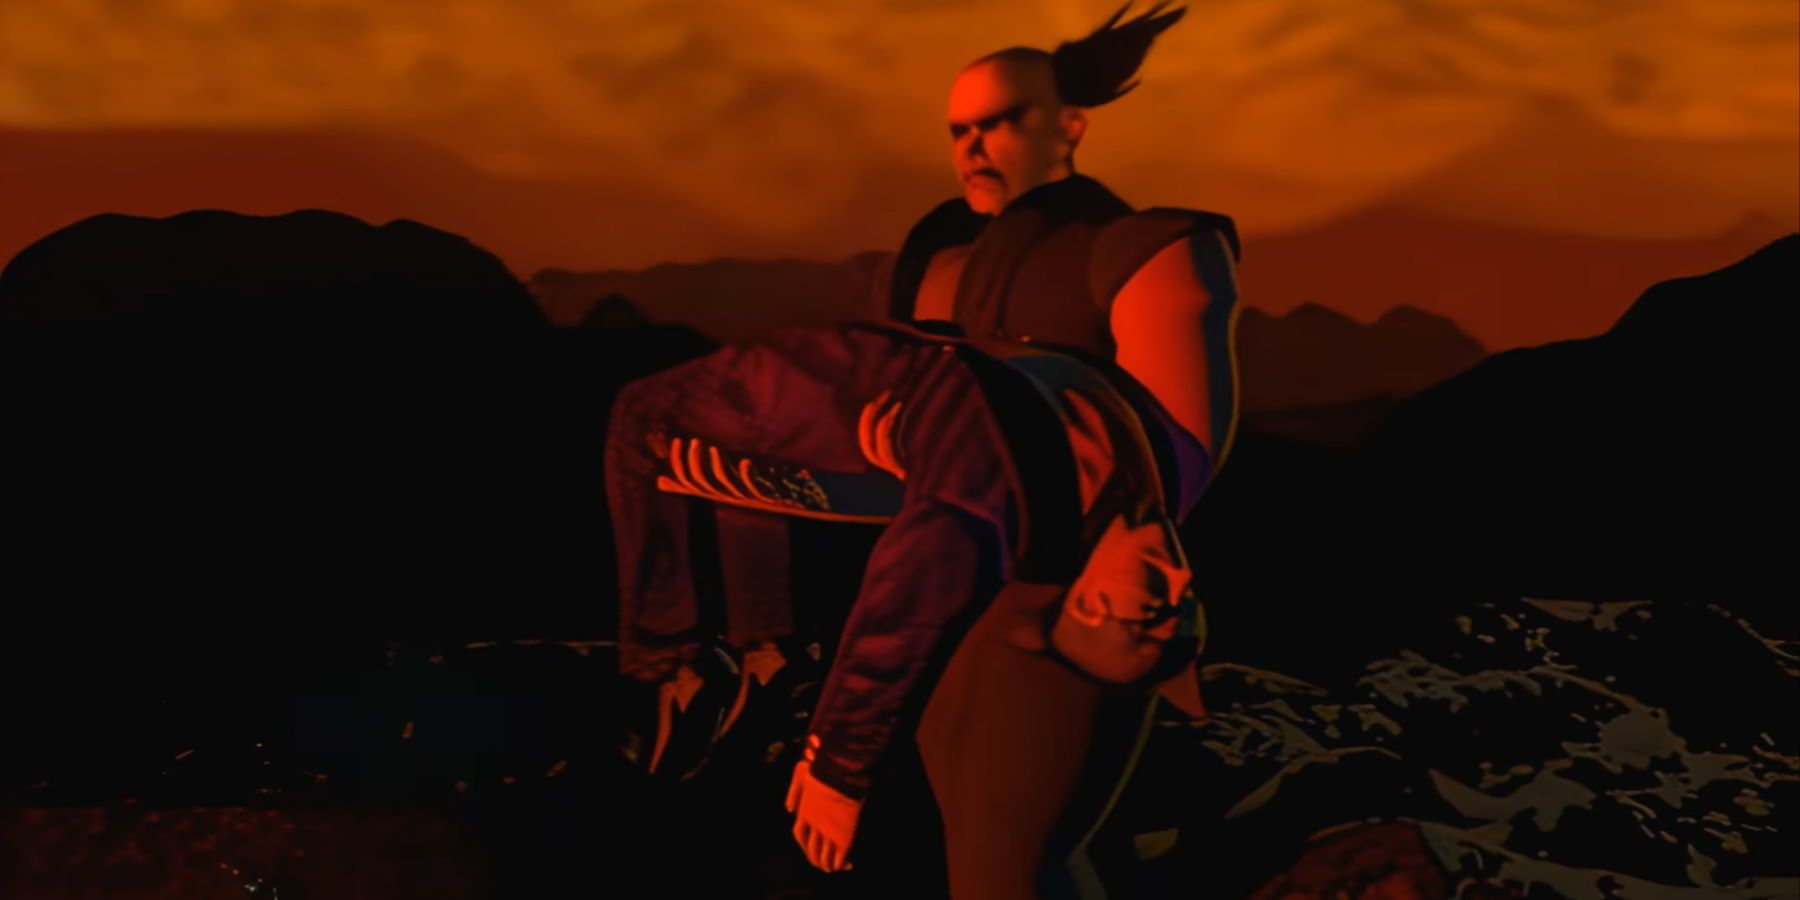 Heihachi carrying Kazuya on a rocky plain under an orange sky